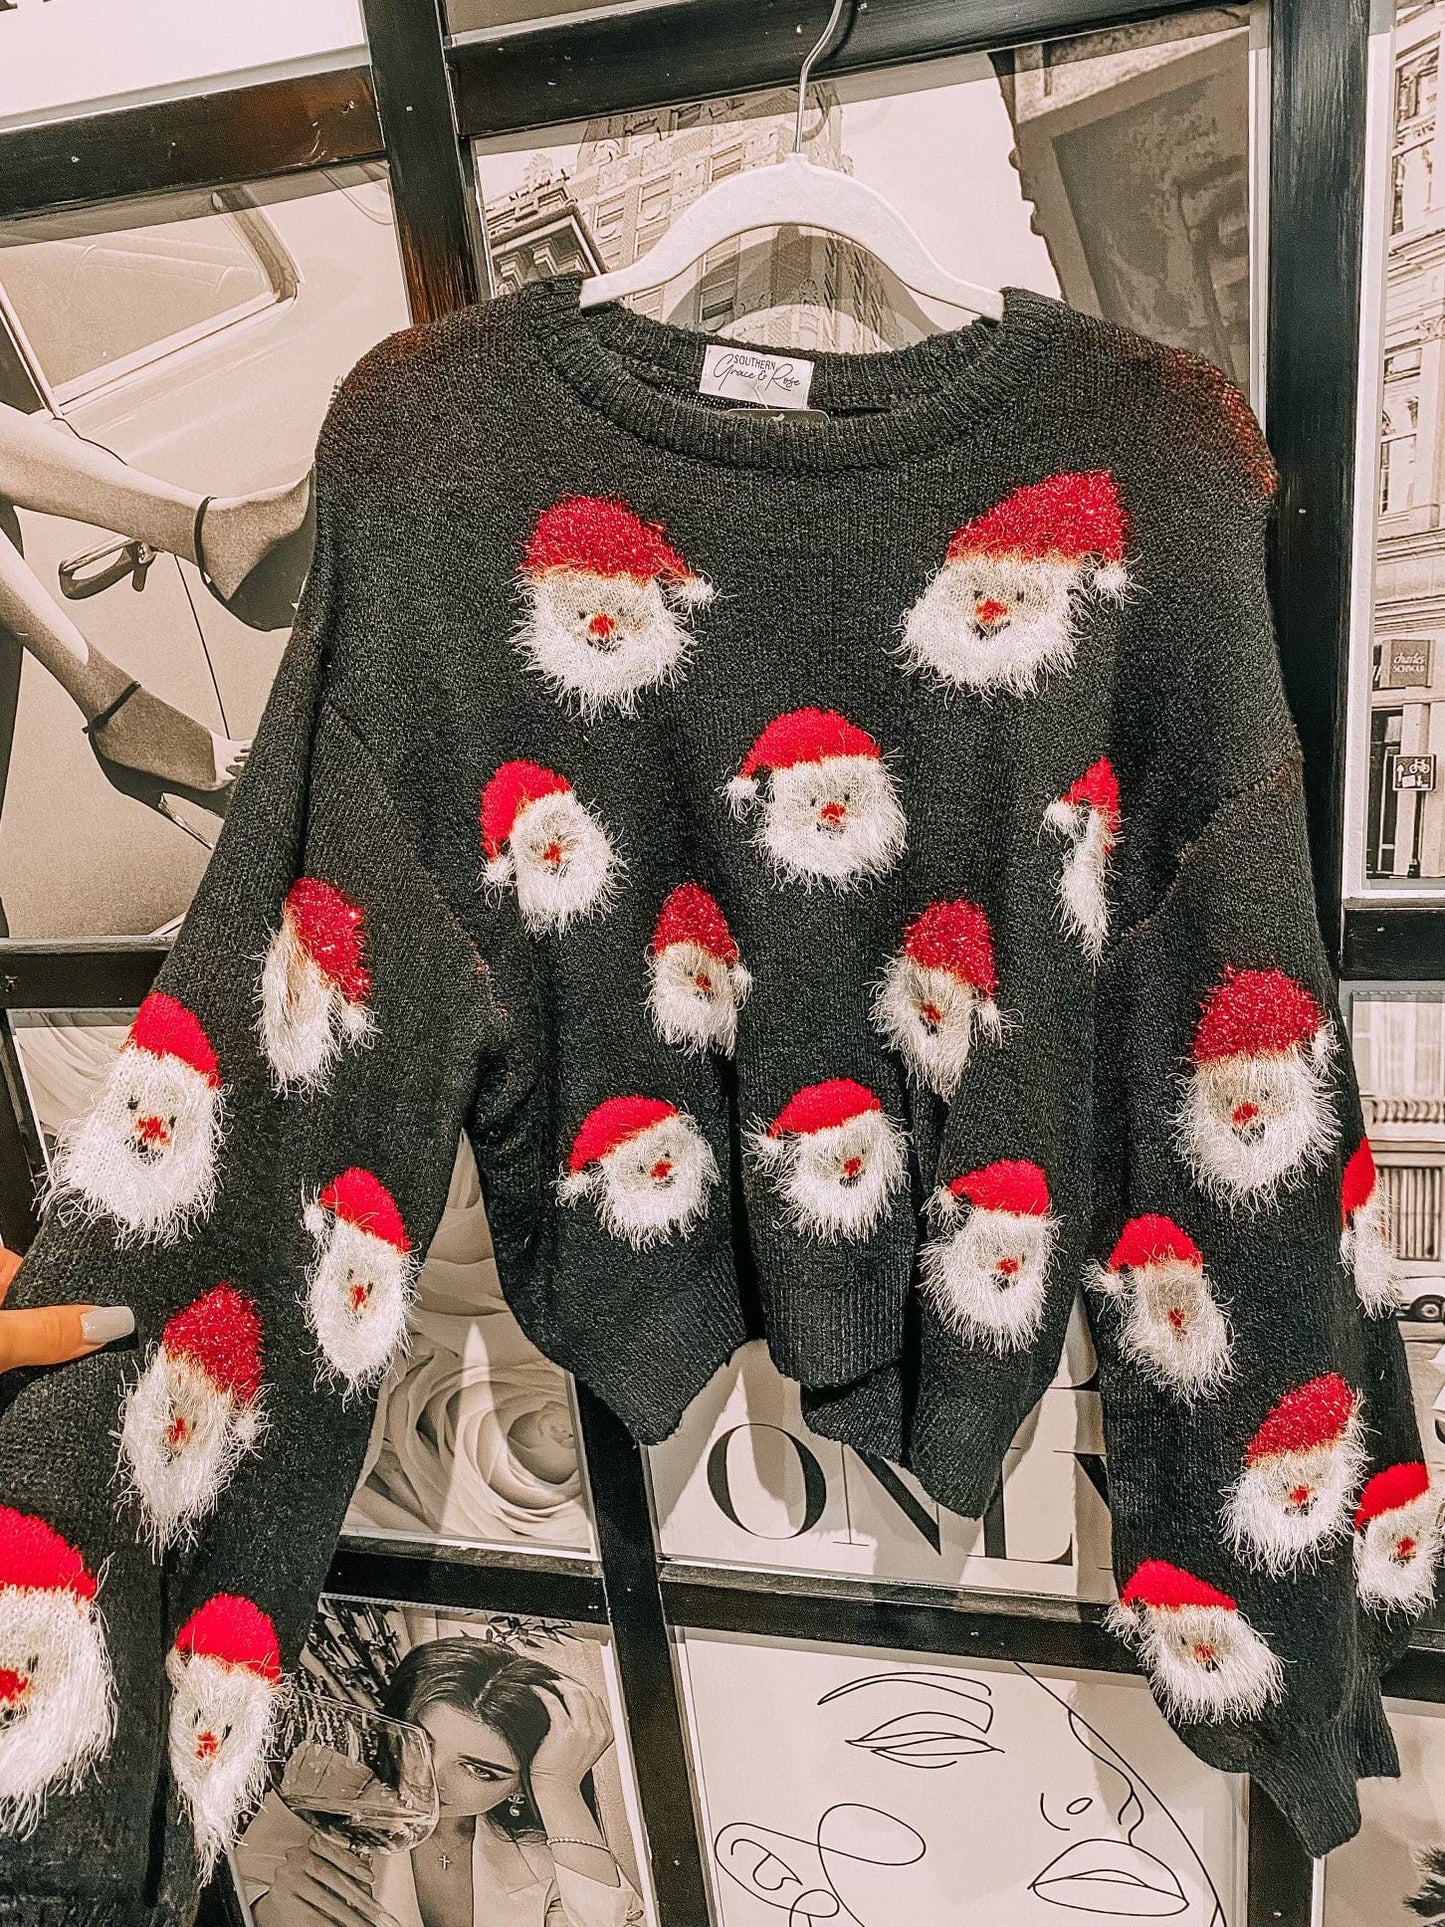 Santa Baby Sweater